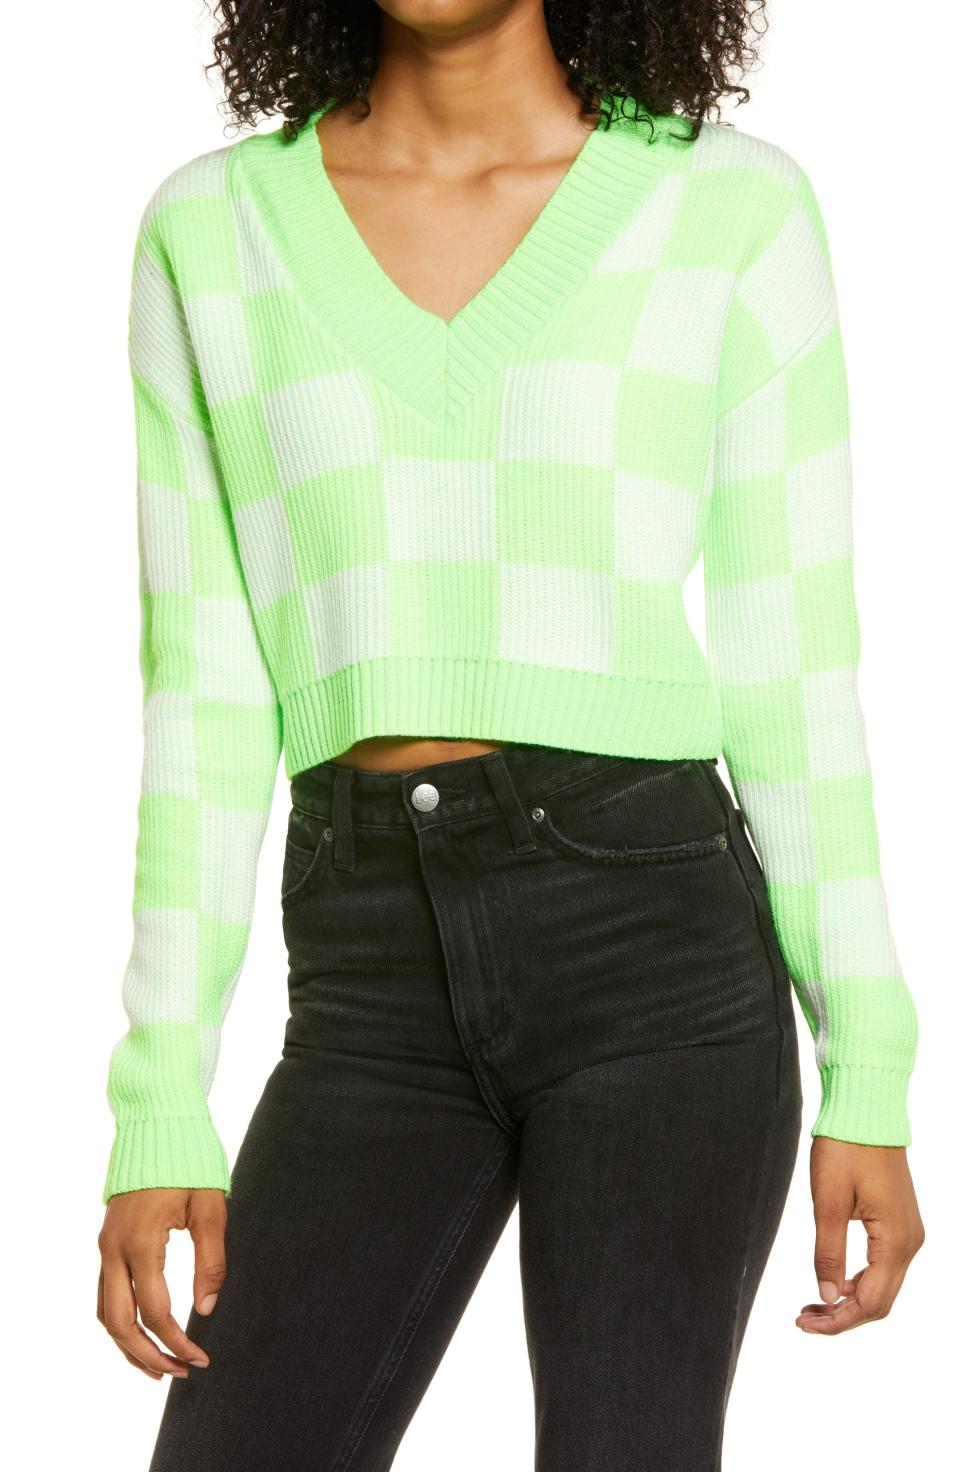 20) Checkered V-Neck Crop Sweater